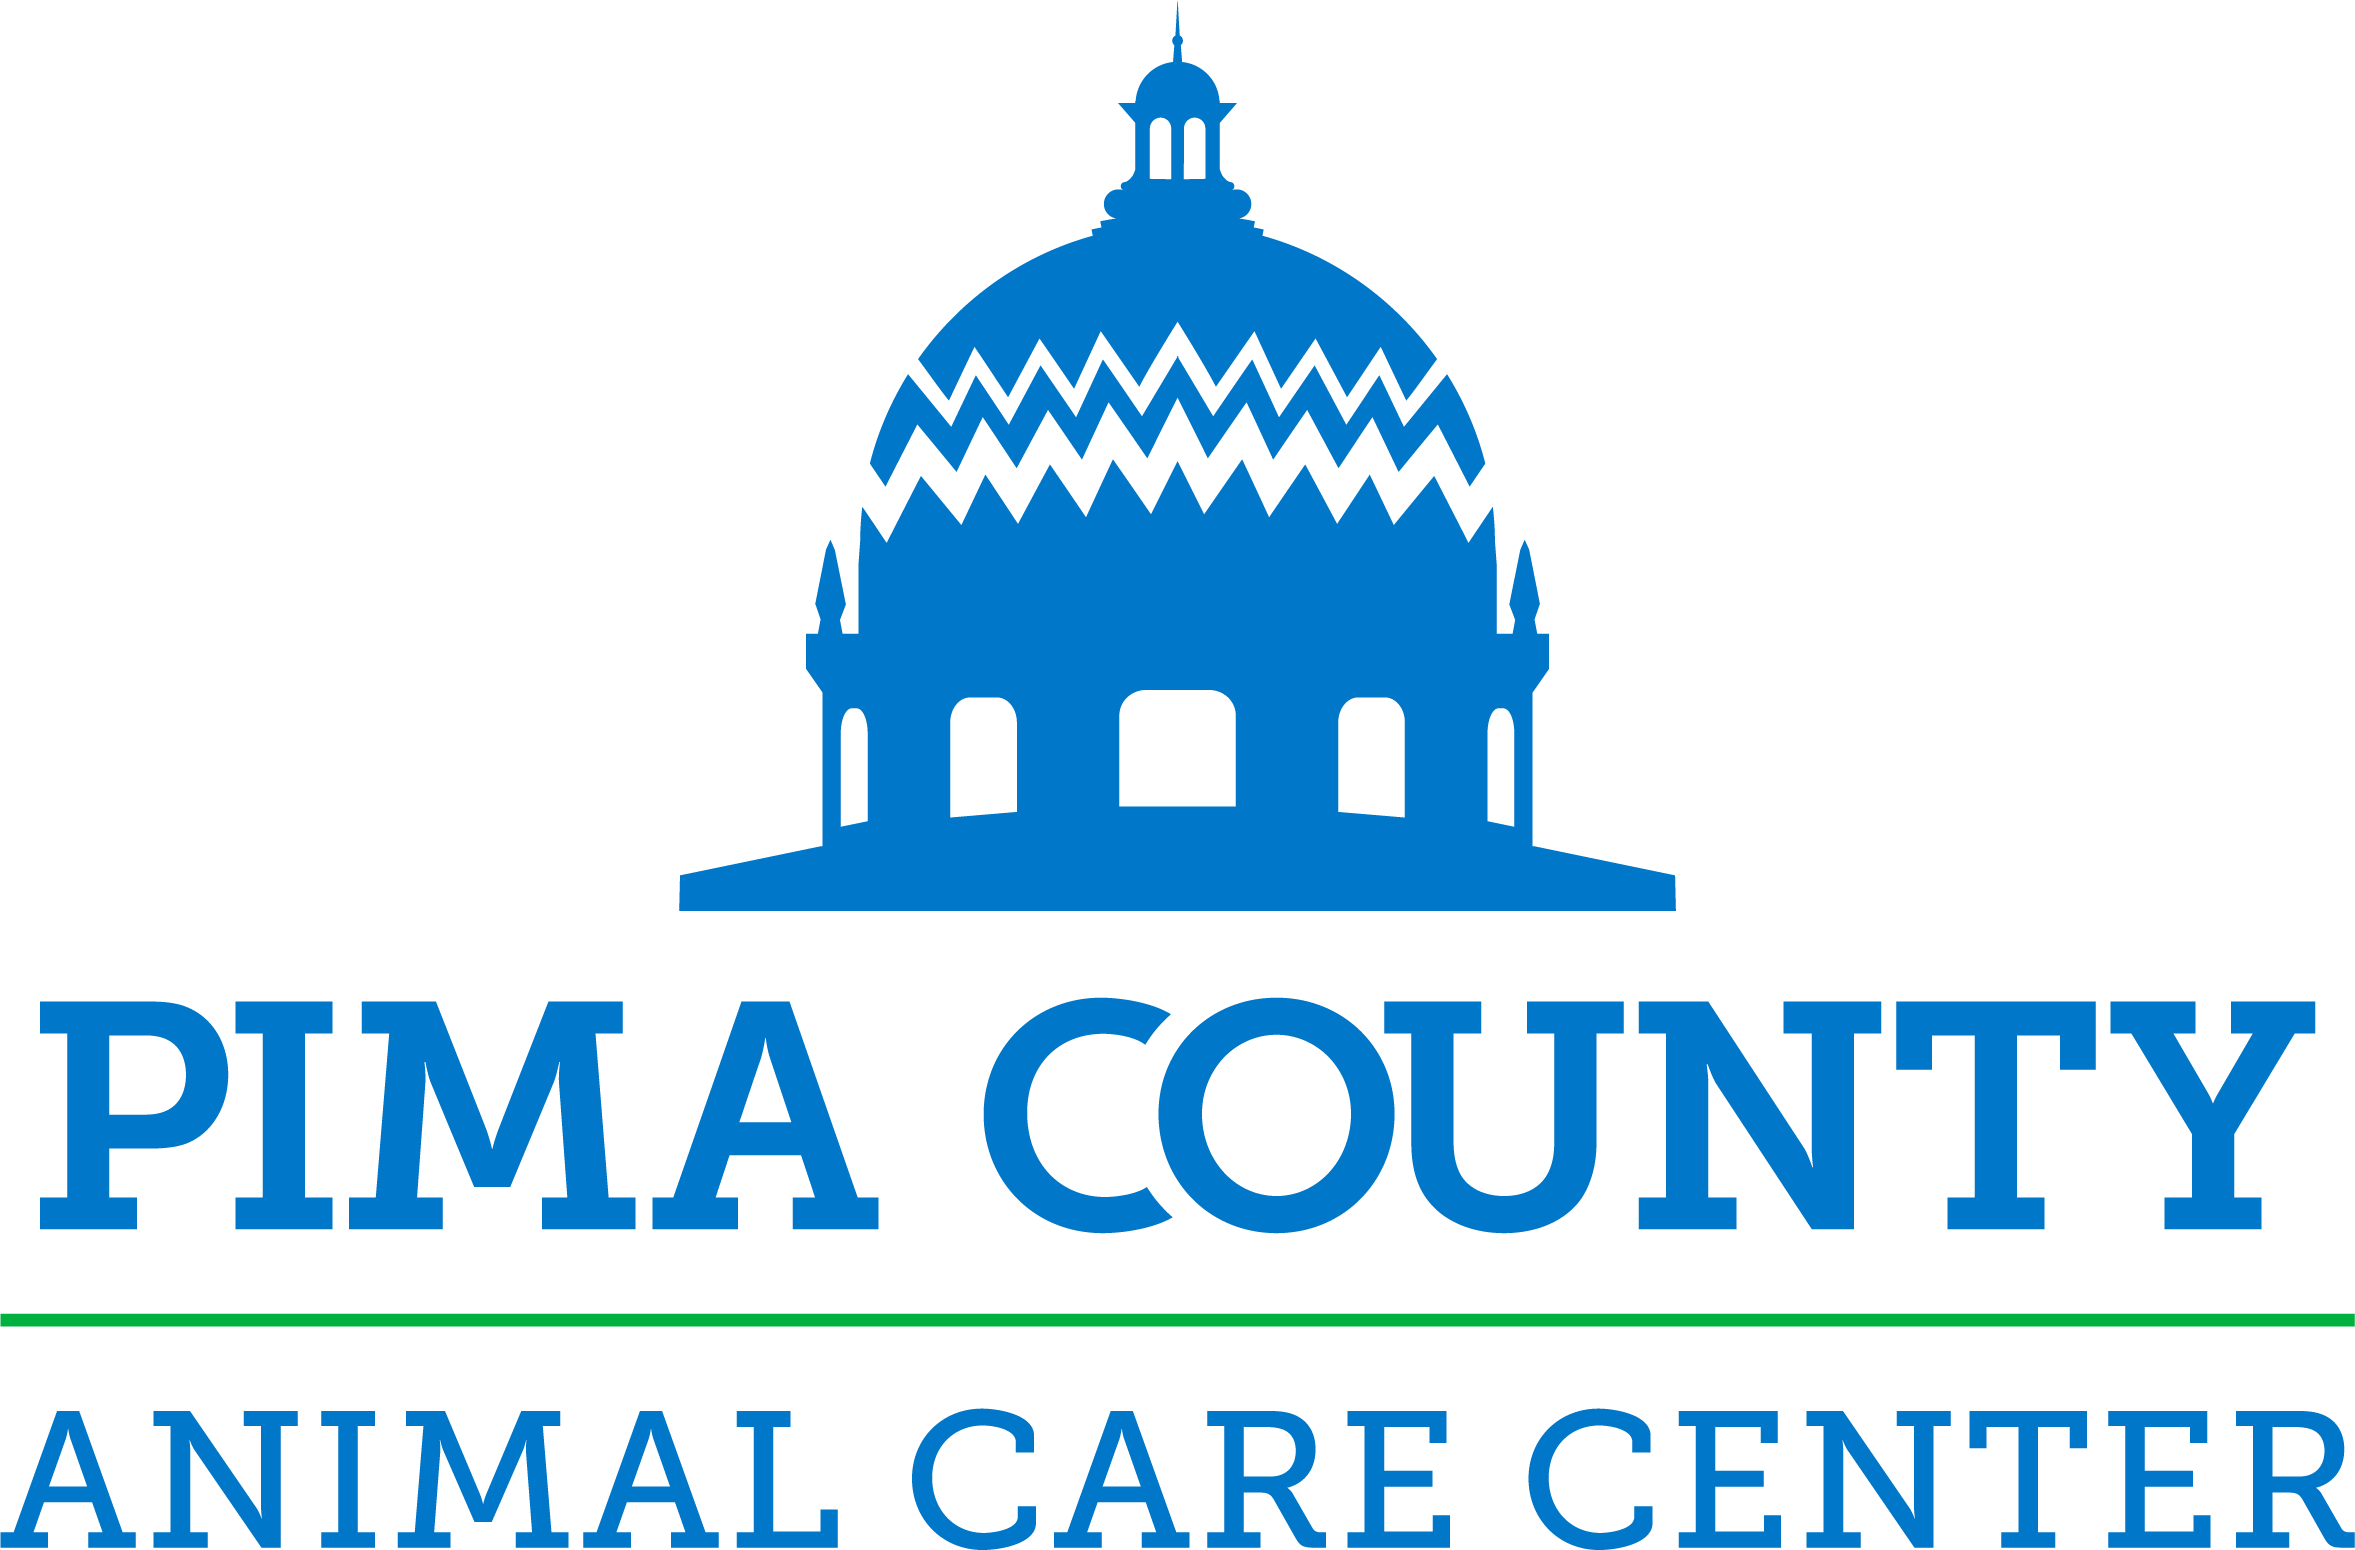 Pima County Animal Care Center